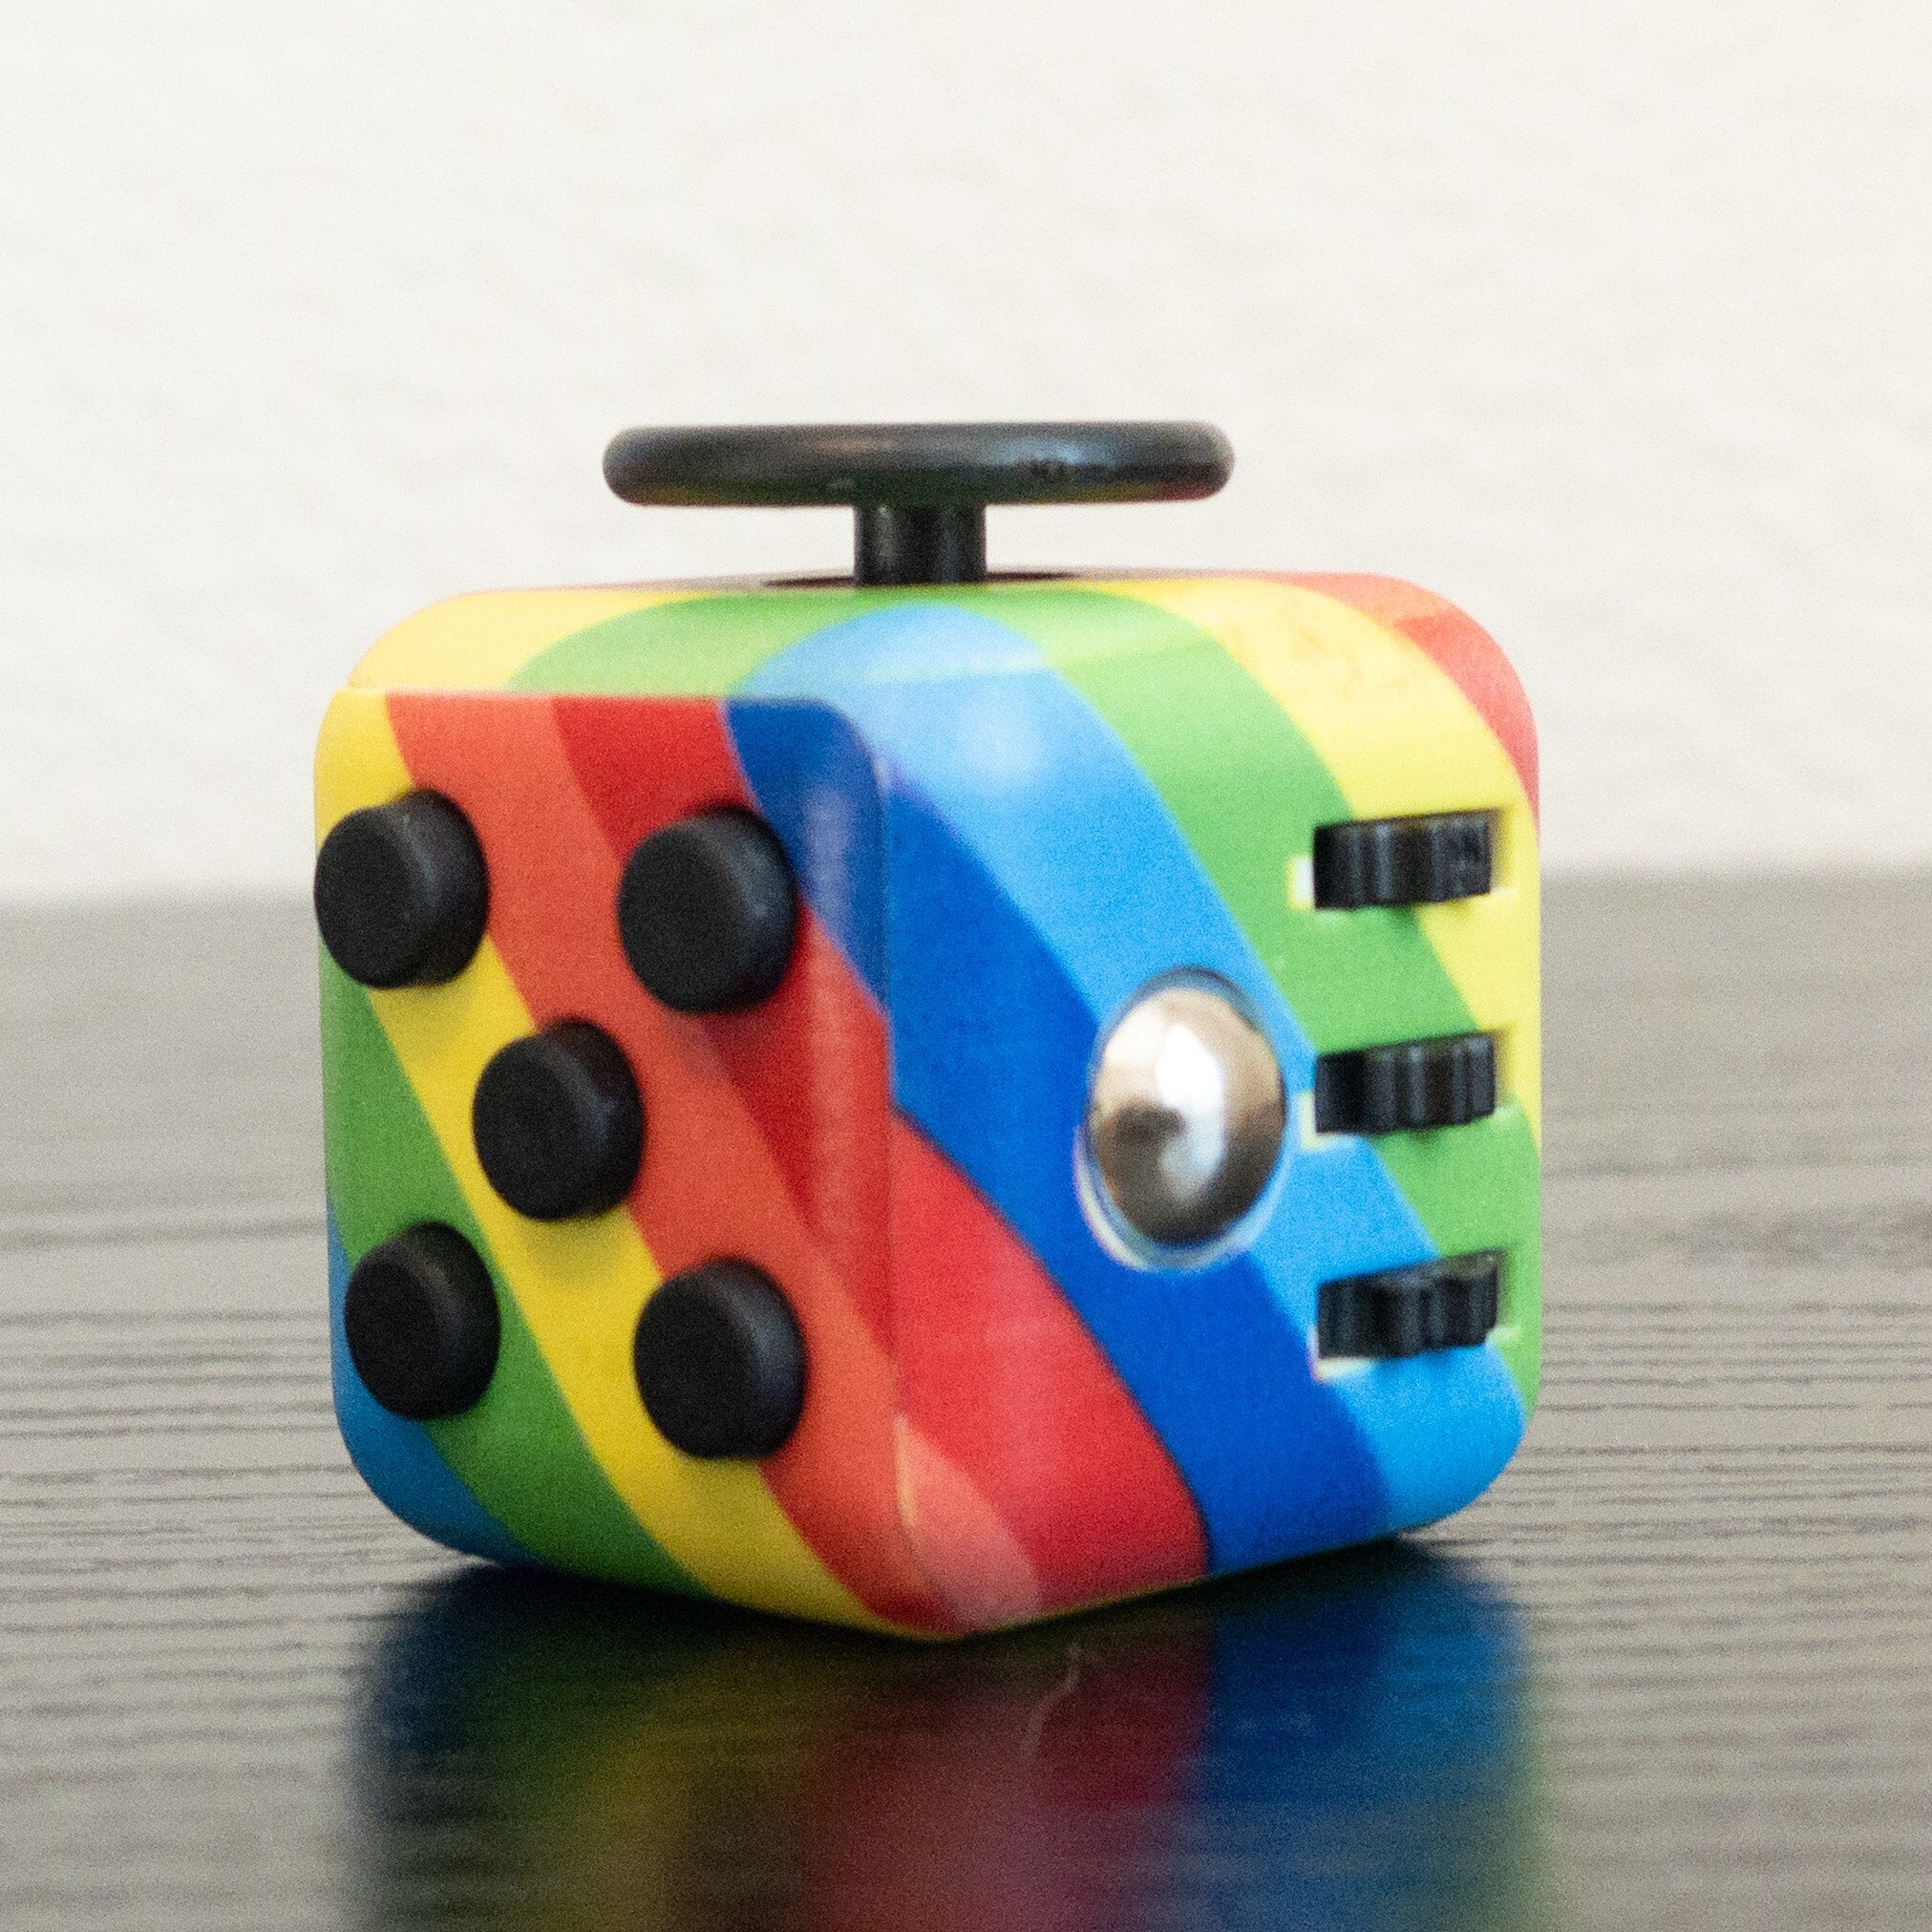 Push Button Fidget Cube – The Autistic Innovator